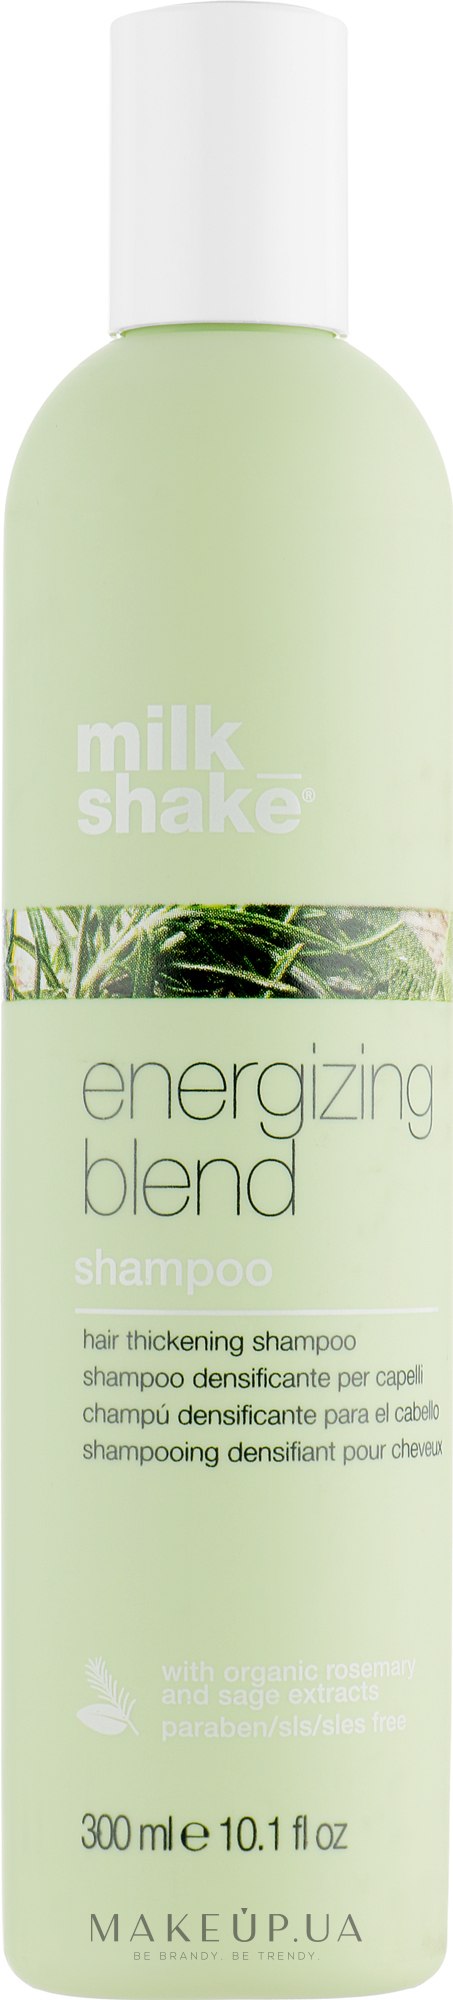 Зміцнювальний шампунь для волосся - Milk_Shake Energizing Blend Hair Shampo — фото 300ml